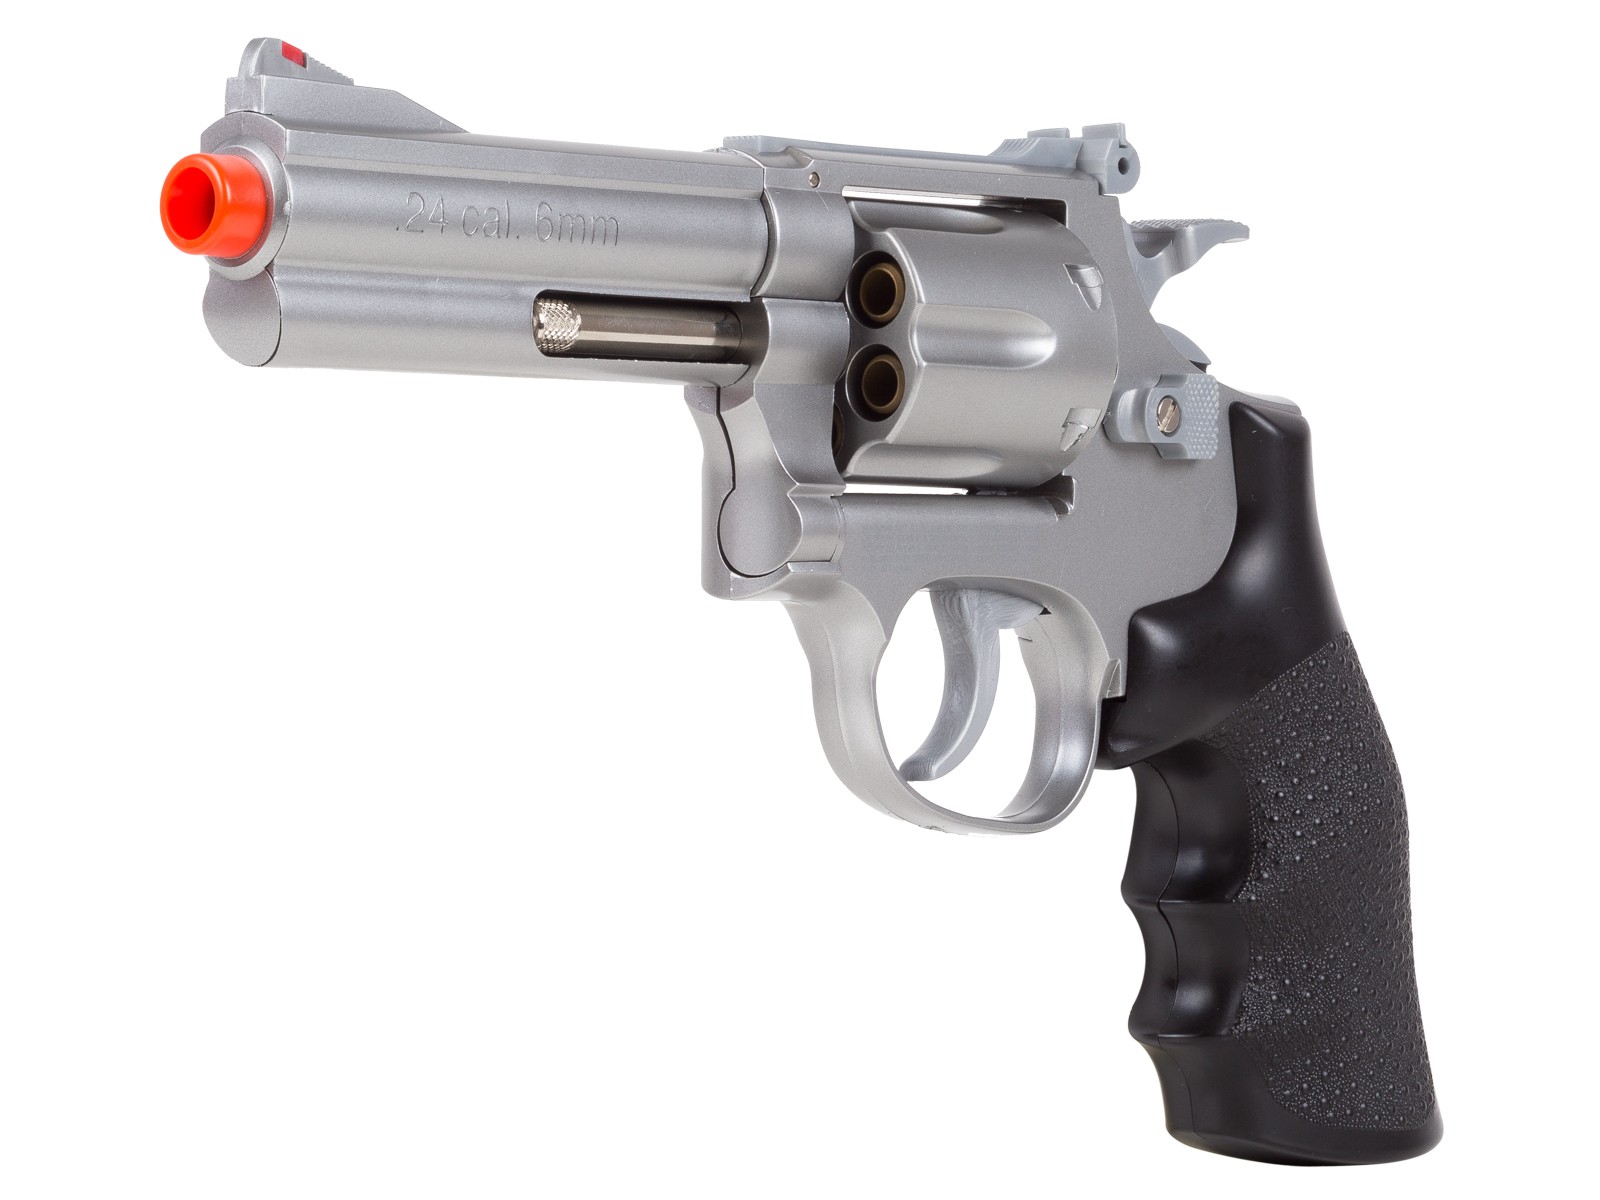 TSD Sports Spring Revolver - 4" Barrel, Silver/Black